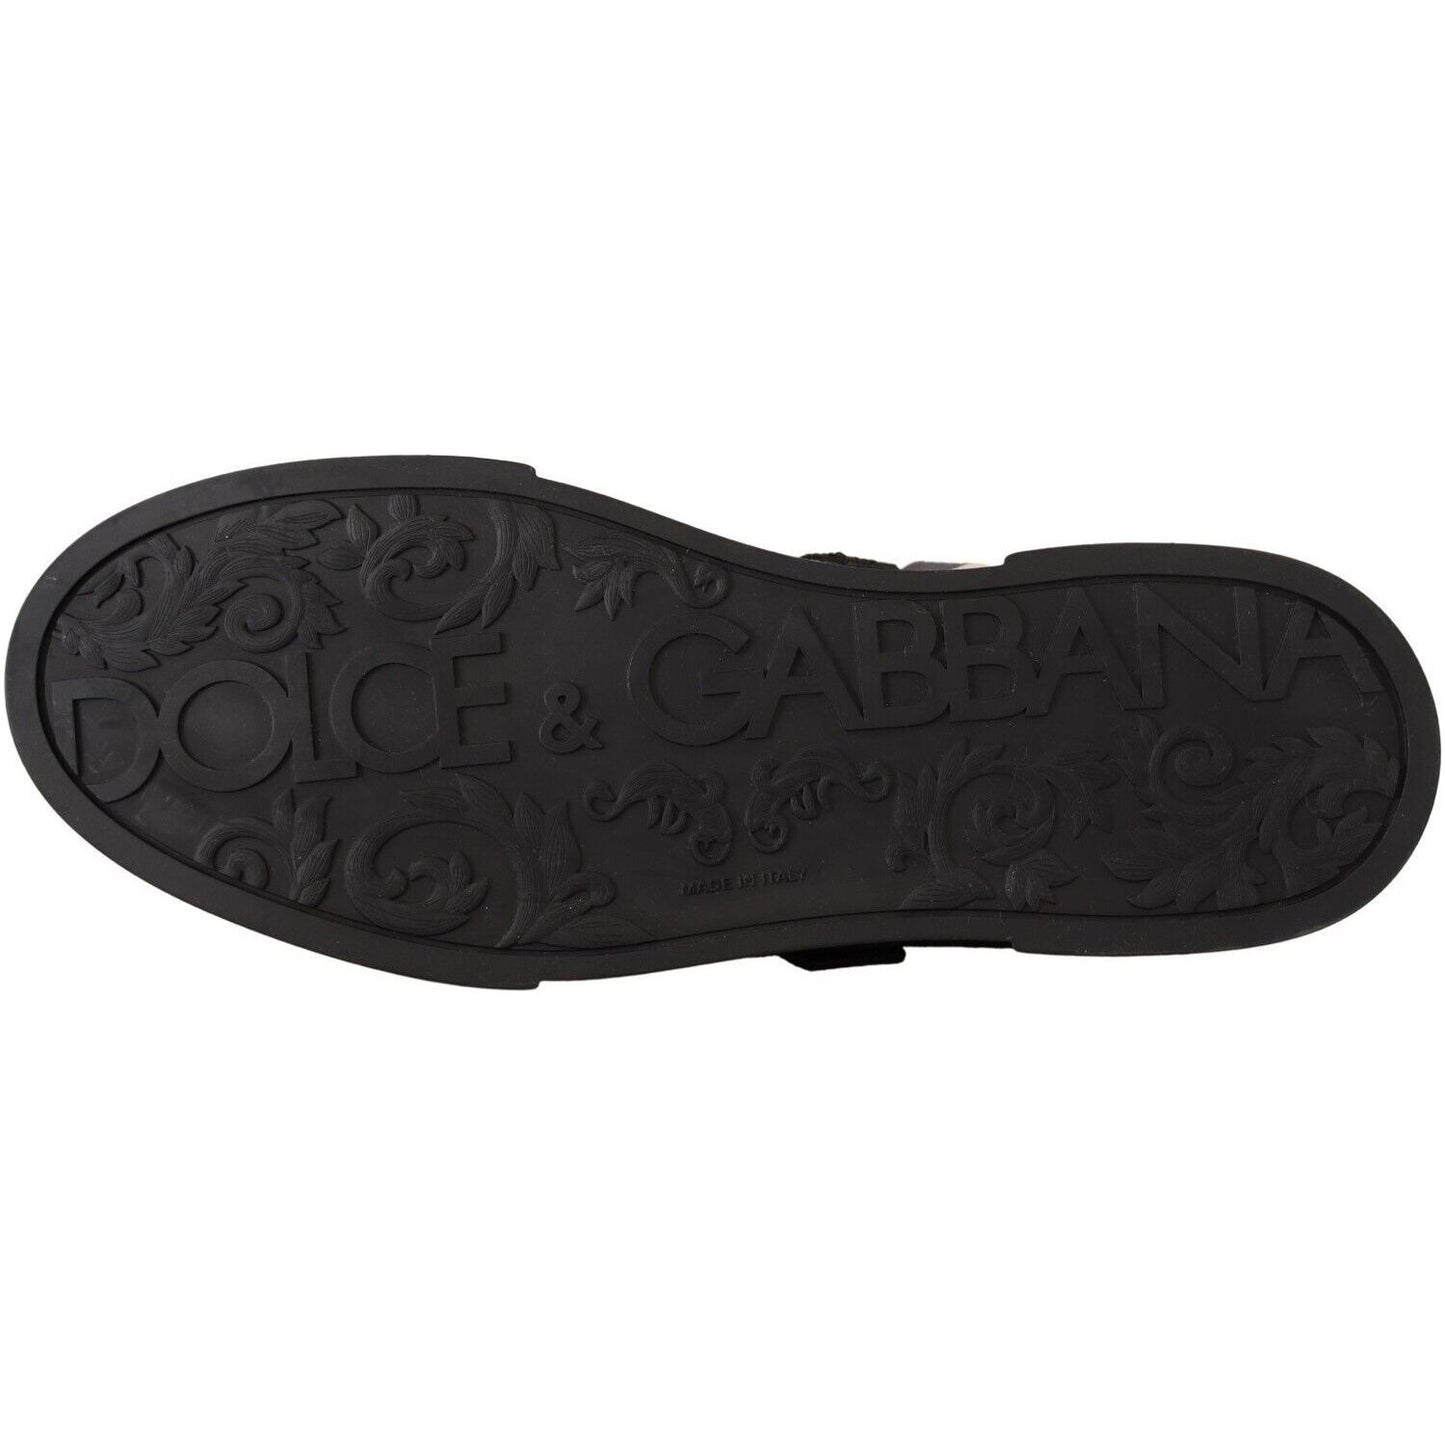 Dolce & Gabbana Zebra Suede Low Top Fashion Sneakers MAN SNEAKERS black-white-zebra-suede-rubber-sneakers-shoes-2 s-l1600-3-66-110d06dc-c0f.jpg